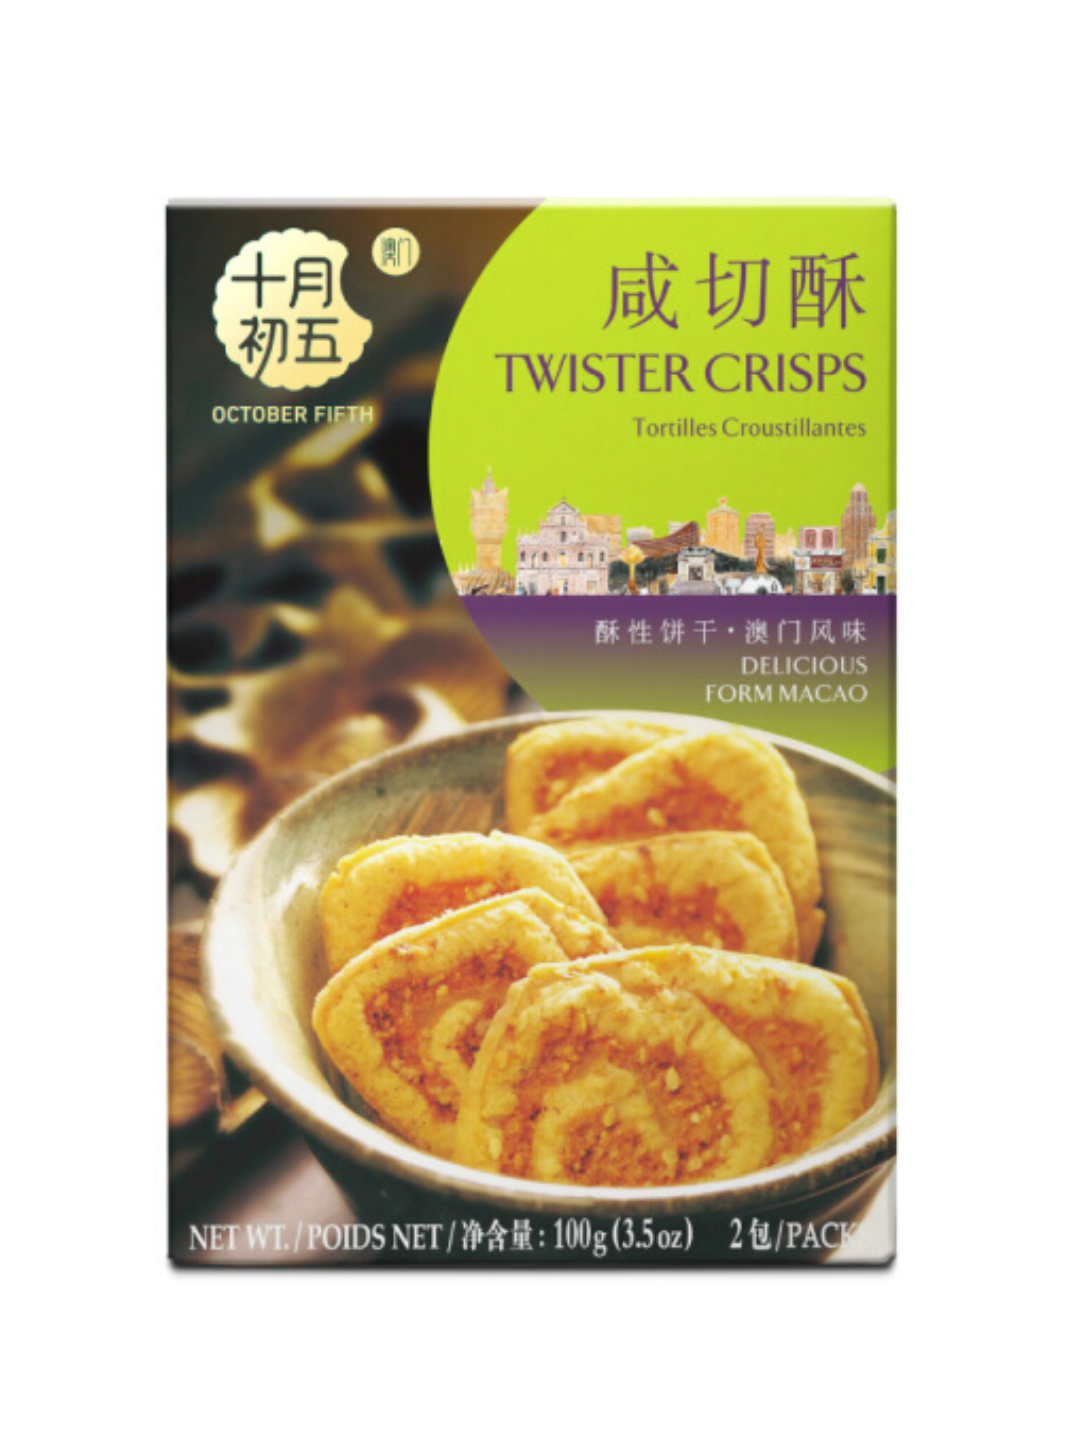 October Fifth Bakery Macau twister crisps